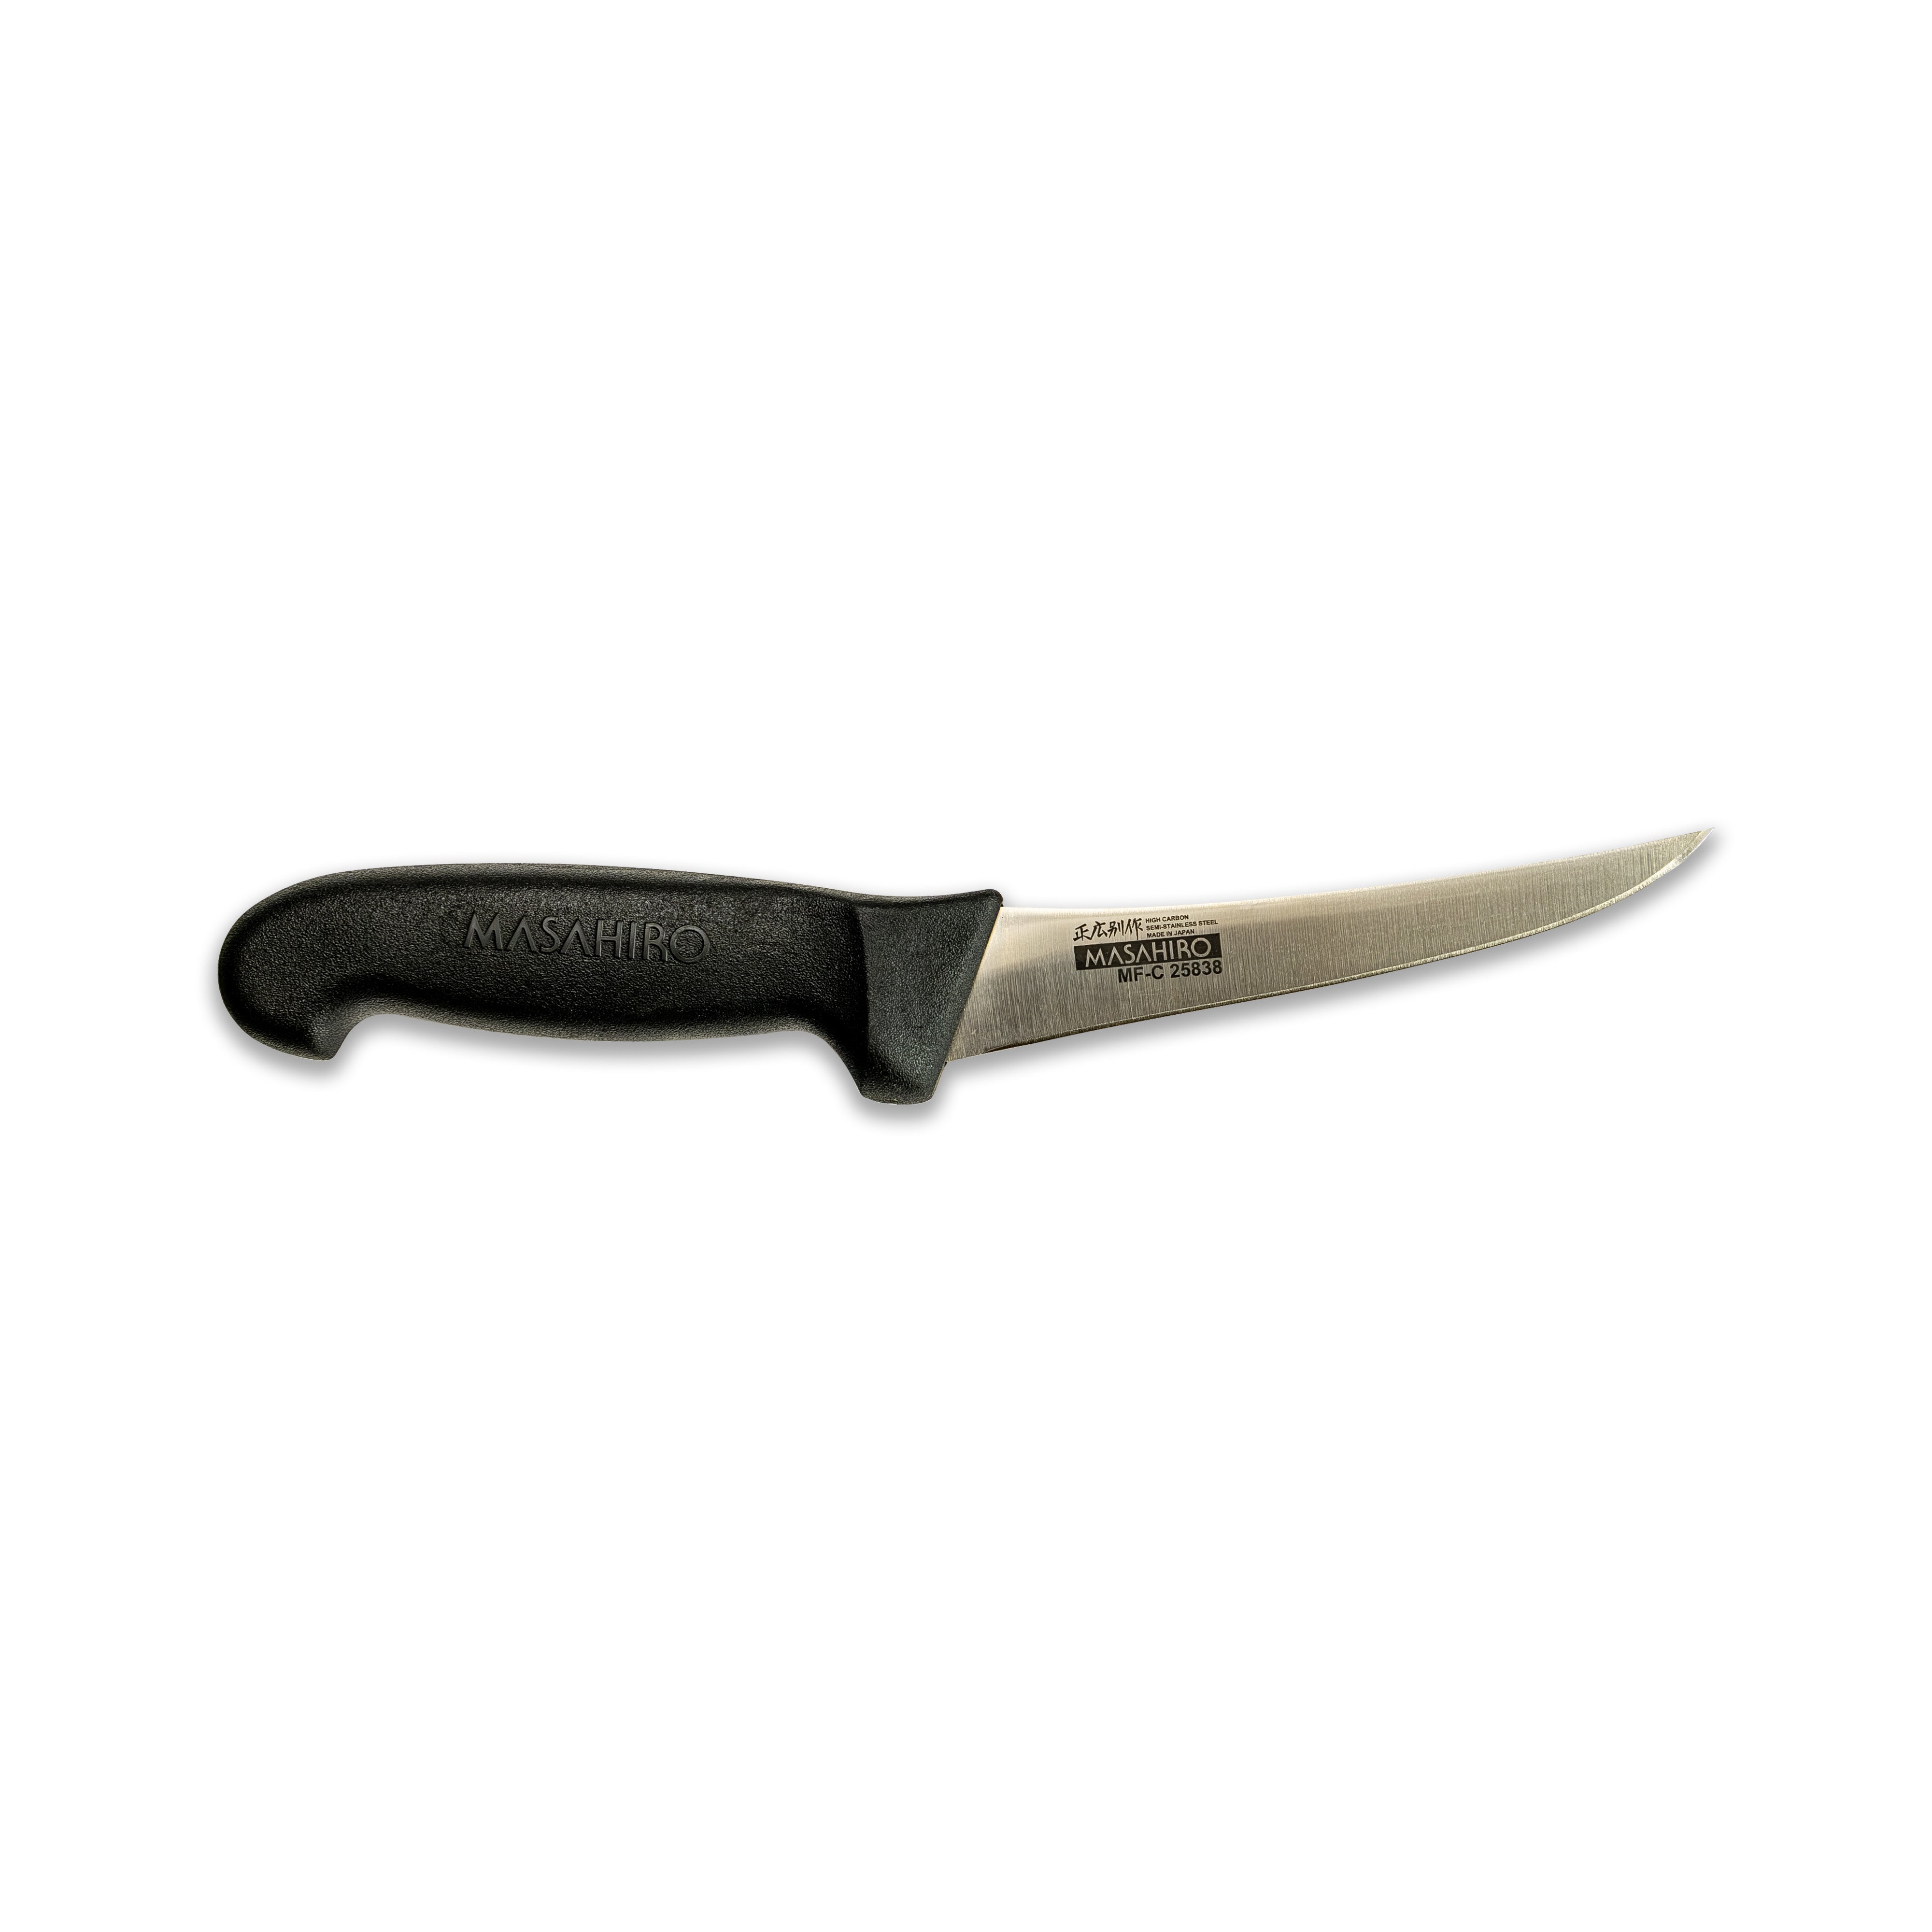 Masahiro Boning Knife 140 mm (Black handle)